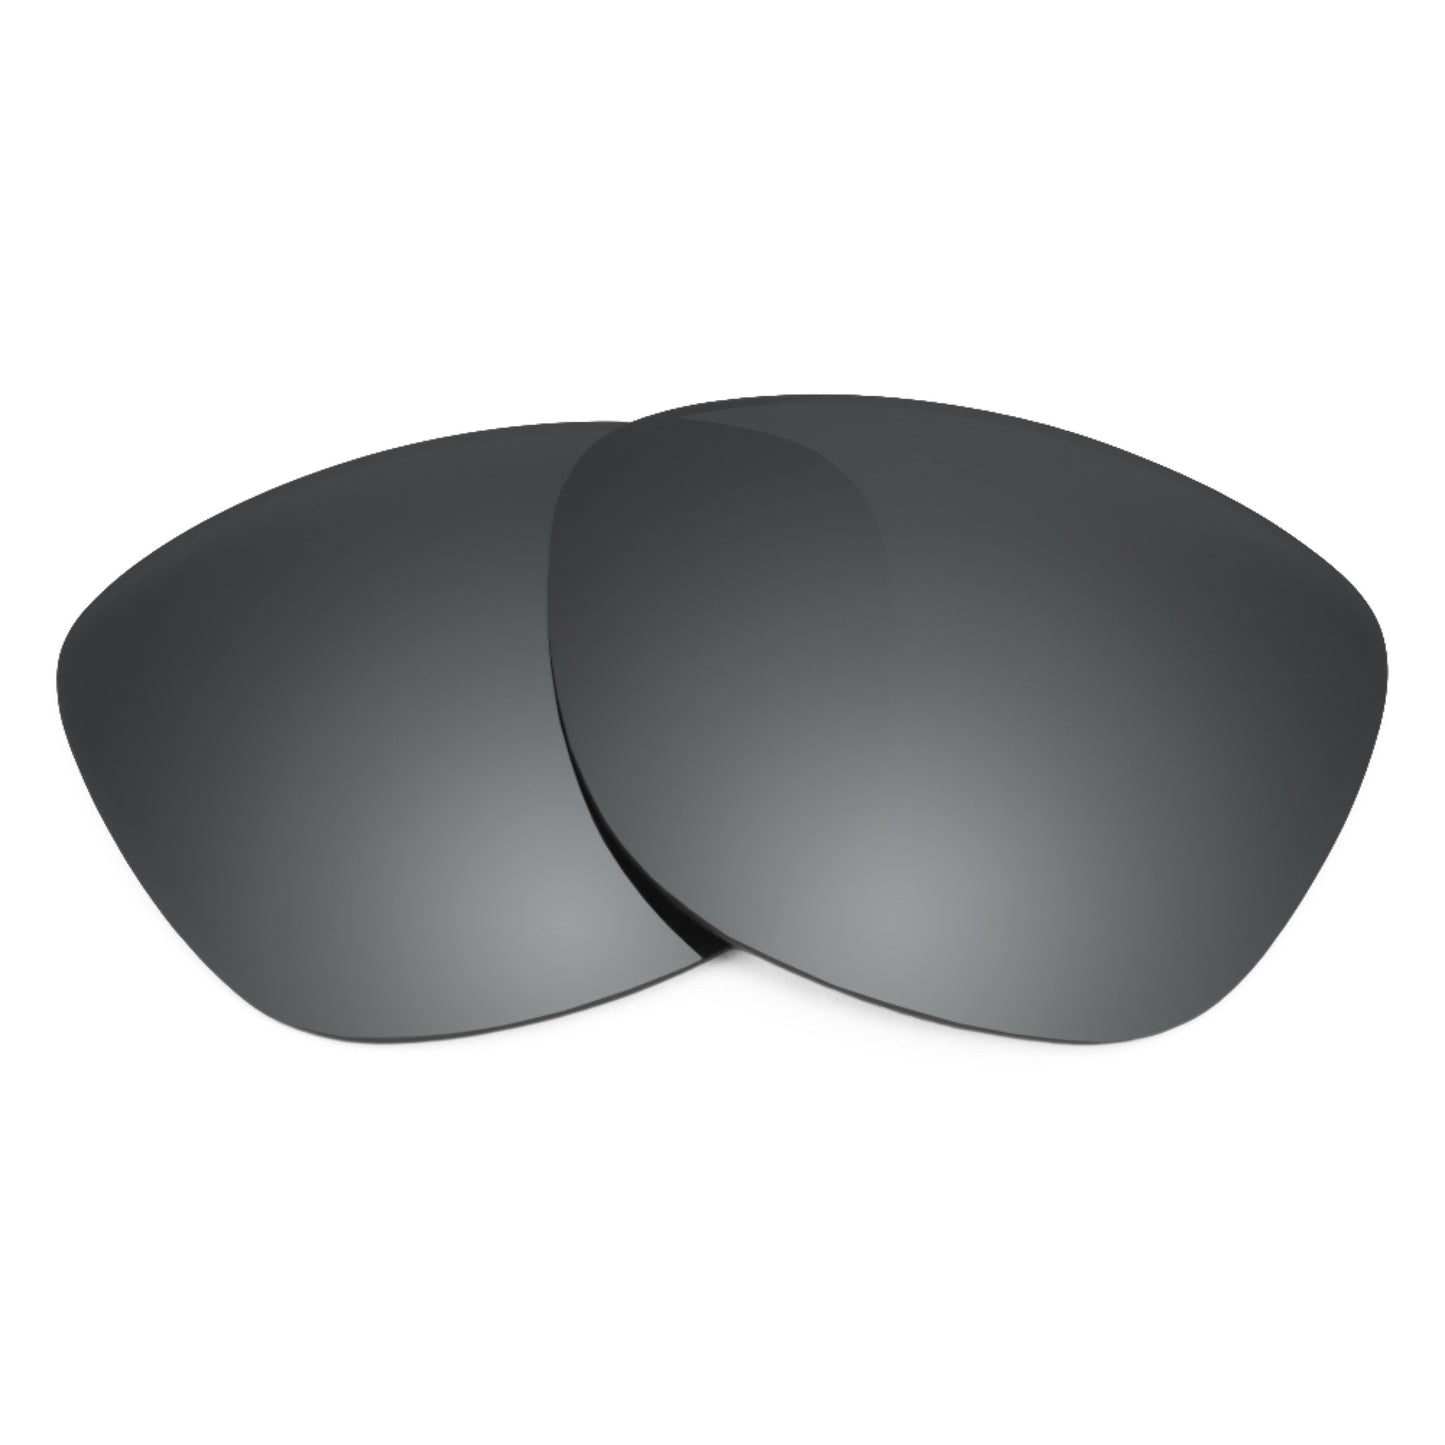 Revant replacement lenses for Ray-Ban Hexagonal RB3548N 51mm Non-Polarized Black Chrome